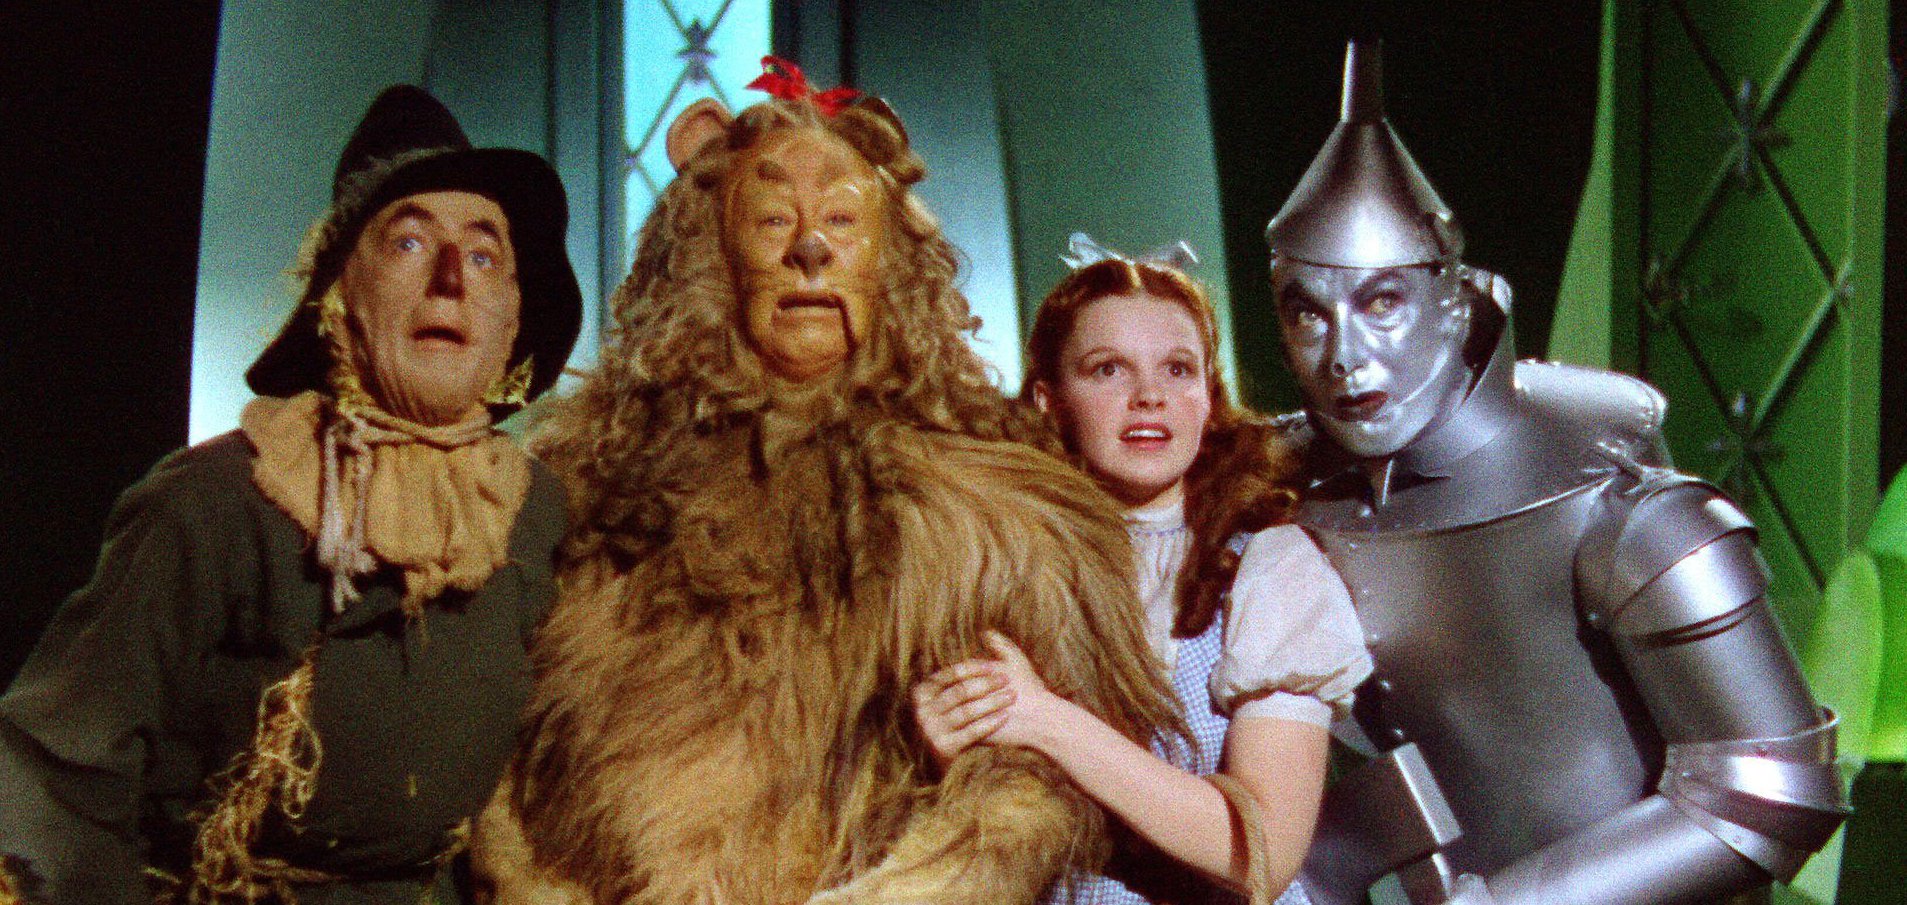 Wizard of Oz test reveals pensioners grasp of tech | HeraldScotland